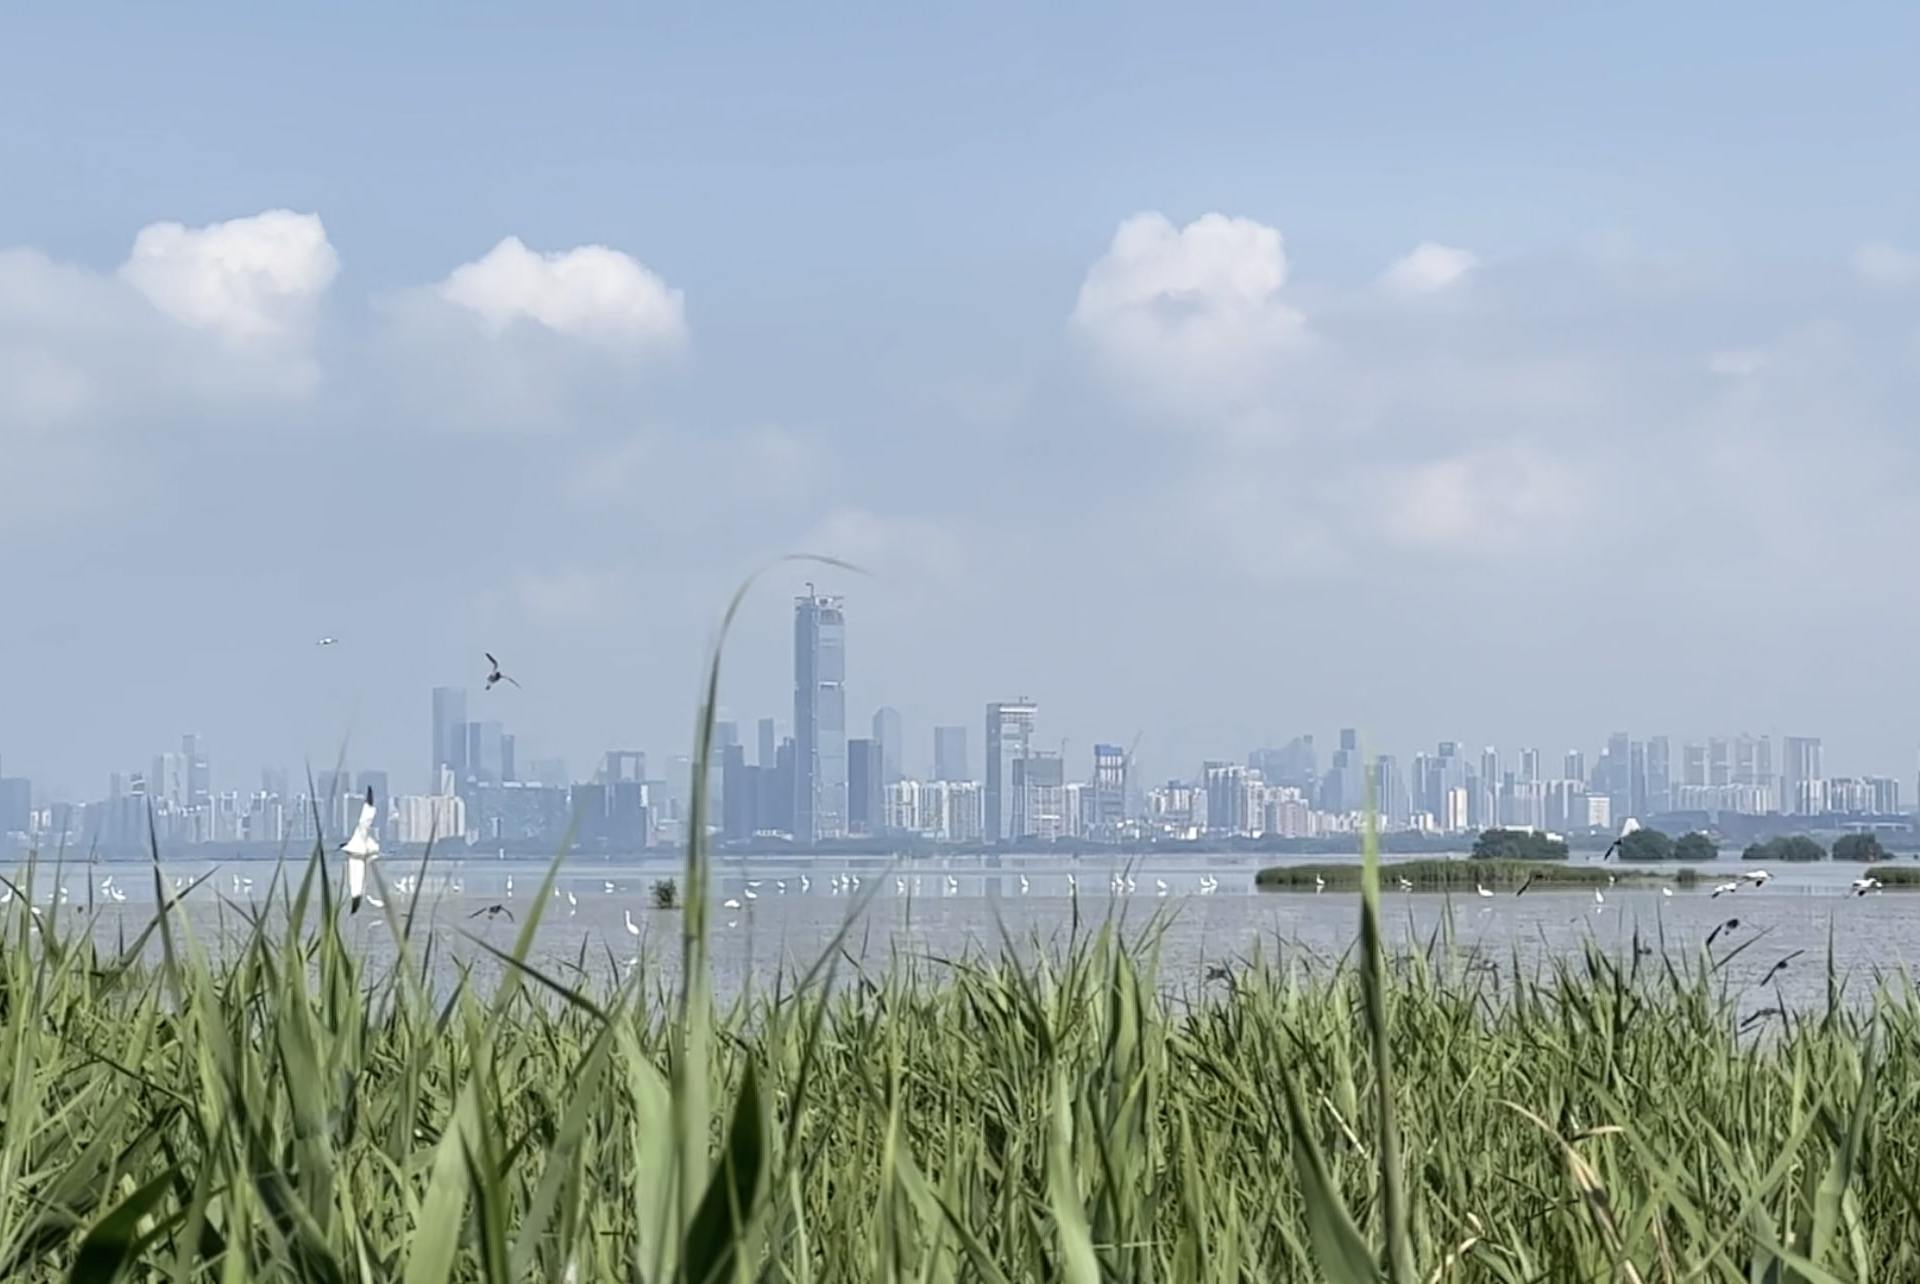 Kebangkitan Cina membayangi lahan basah padat Hong Kong |  berita lingkungan